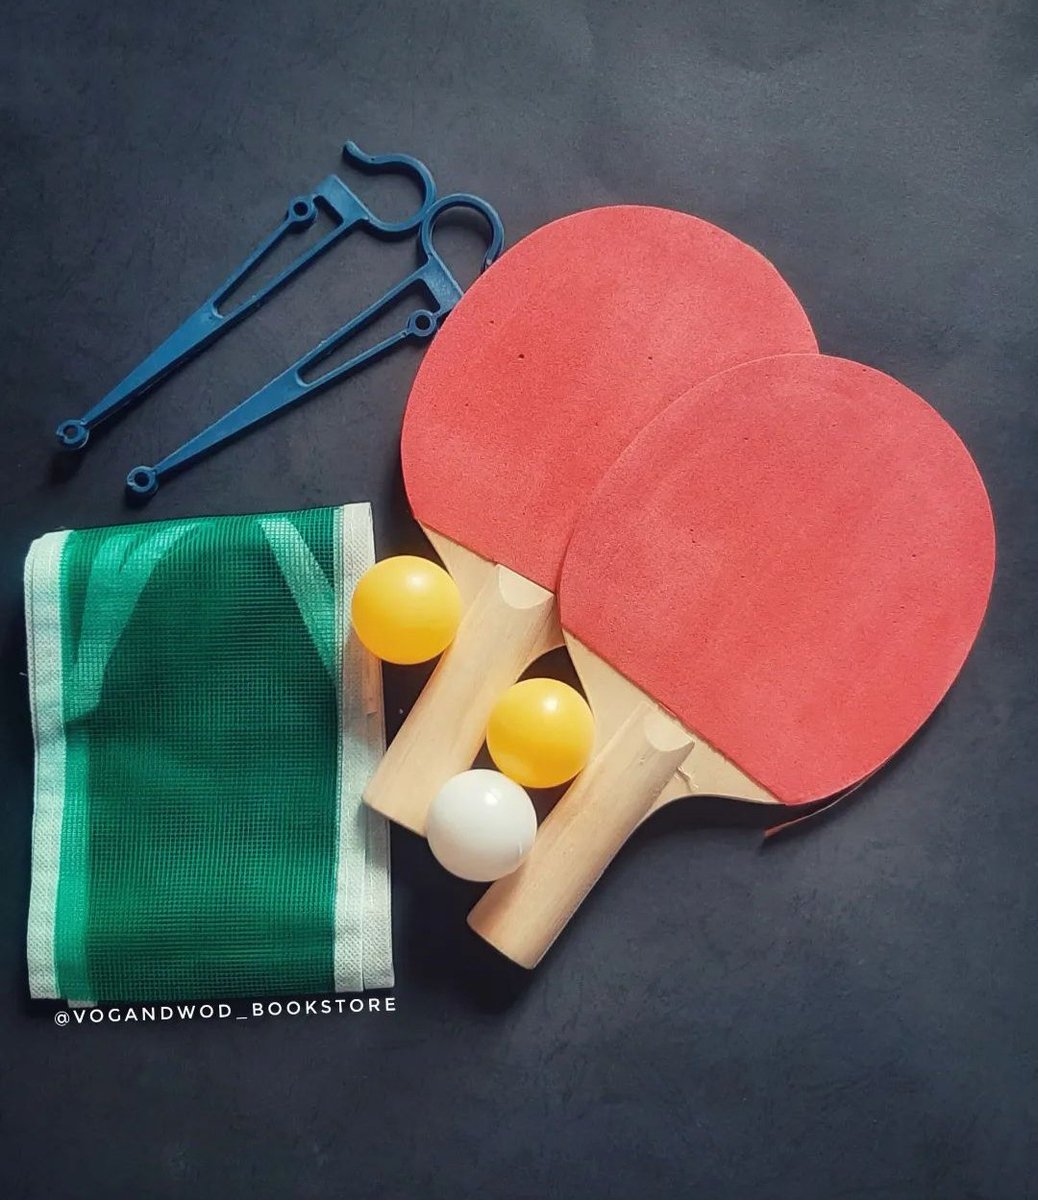 Table Tennis Set
.
Price N5500
.
.
#vogandwod
#vogandwodbooks
#vogandwodbookstore
#ikejabookshop
#bookstoresinlagos
#books
#bookstagram
#childrenbooks
#childrenbestseller
#tabletennis
#sport
#readknowlearngo